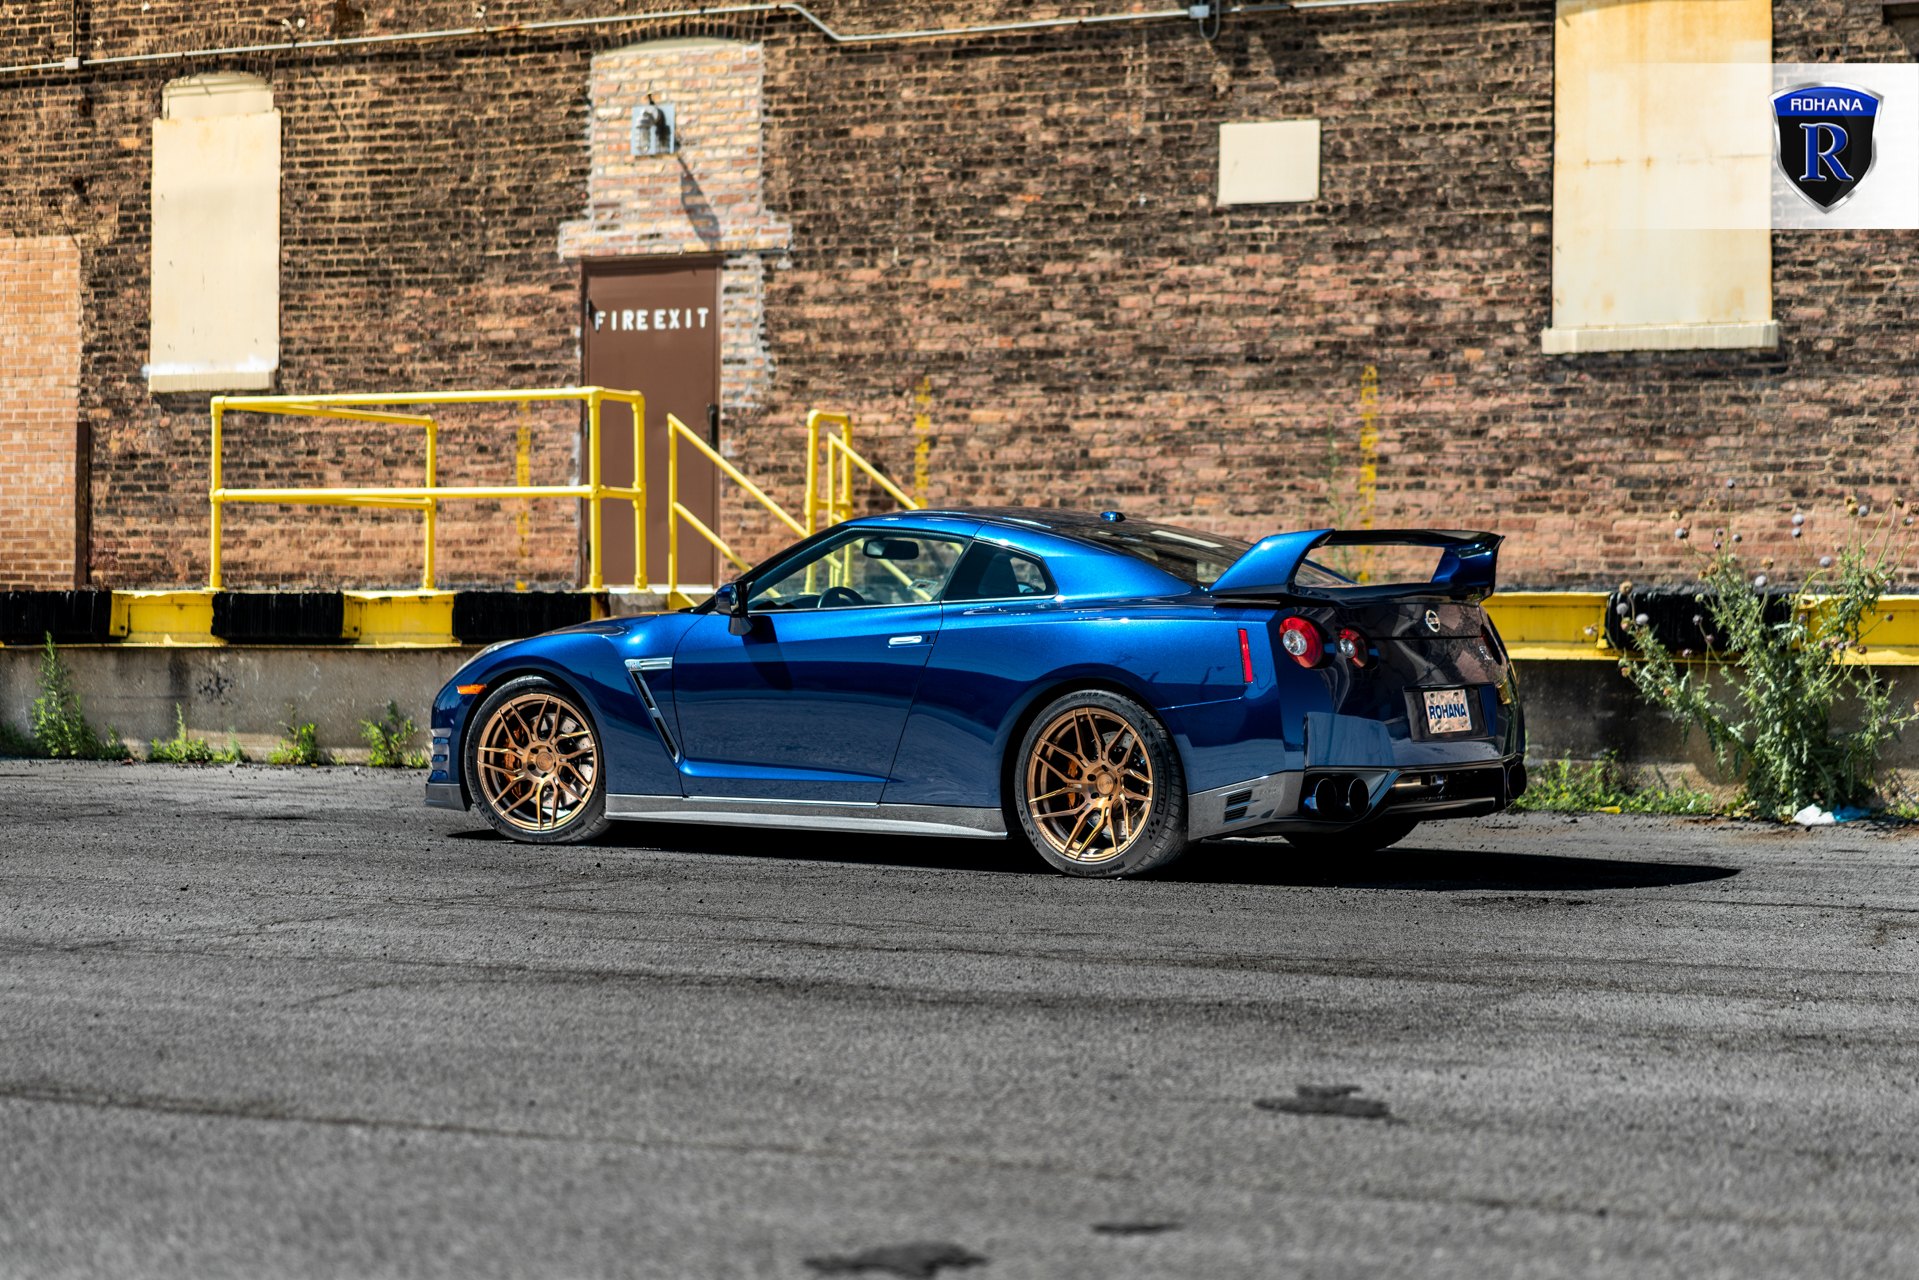 Custom Style Rear Spoiler on Blue Nissan GT-R - Photo by Rohana Wheels